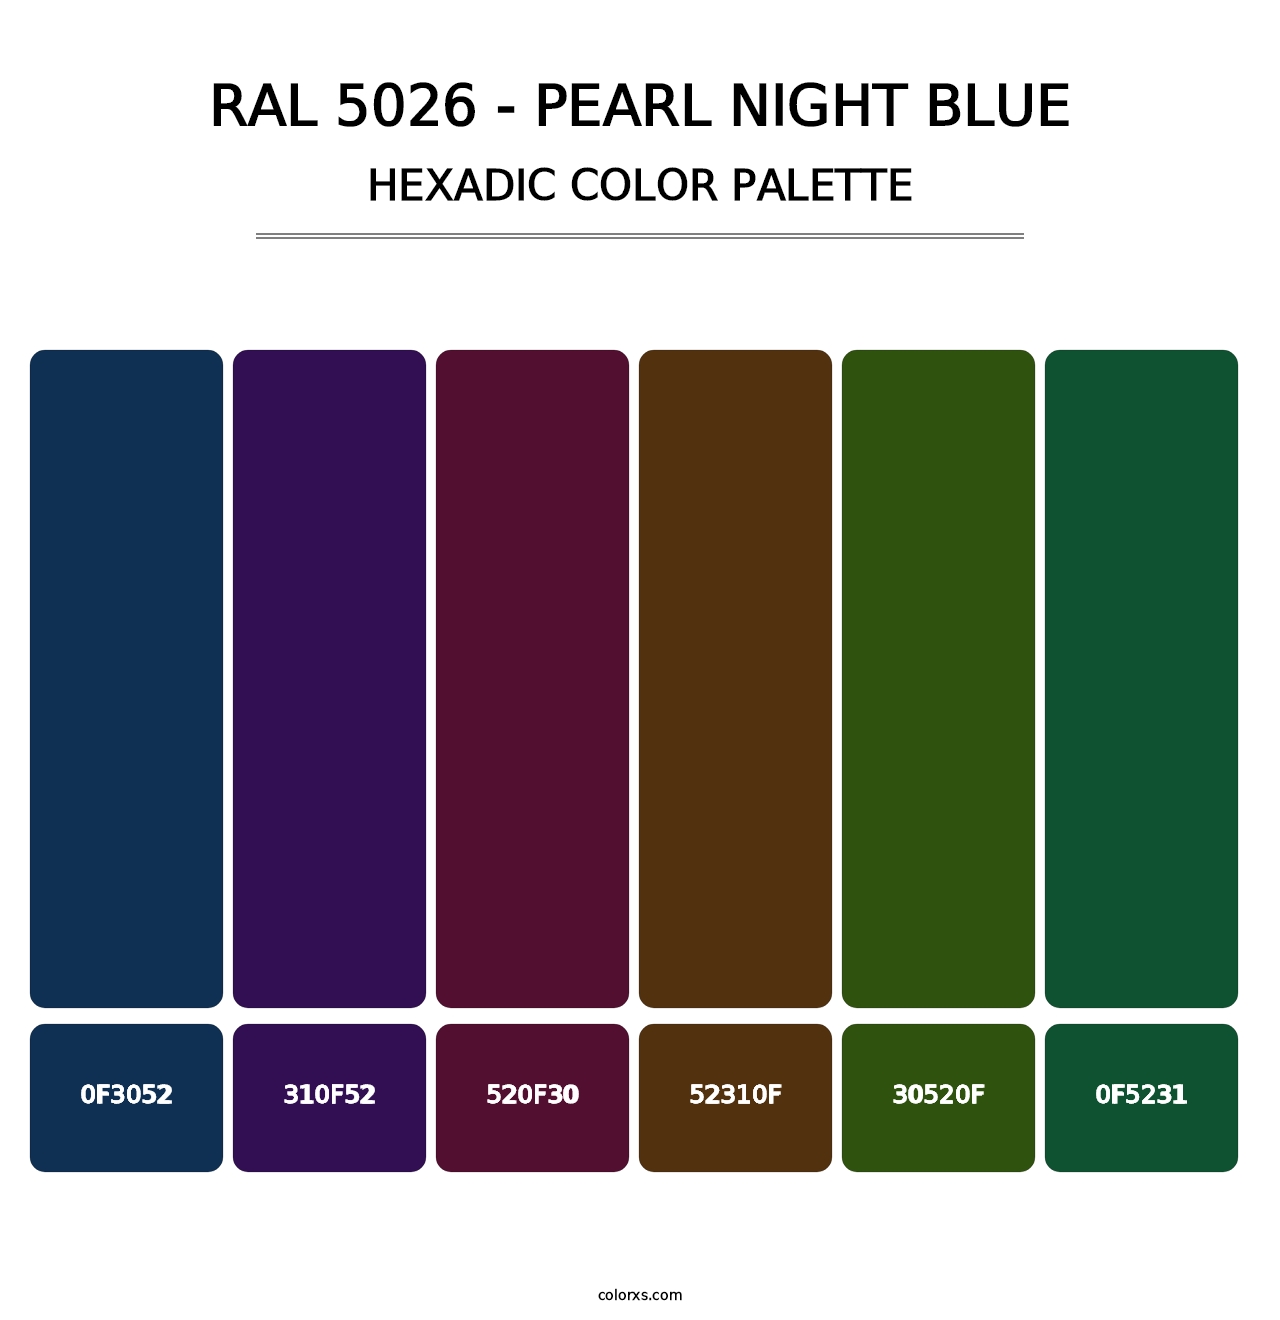 RAL 5026 - Pearl Night Blue - Hexadic Color Palette